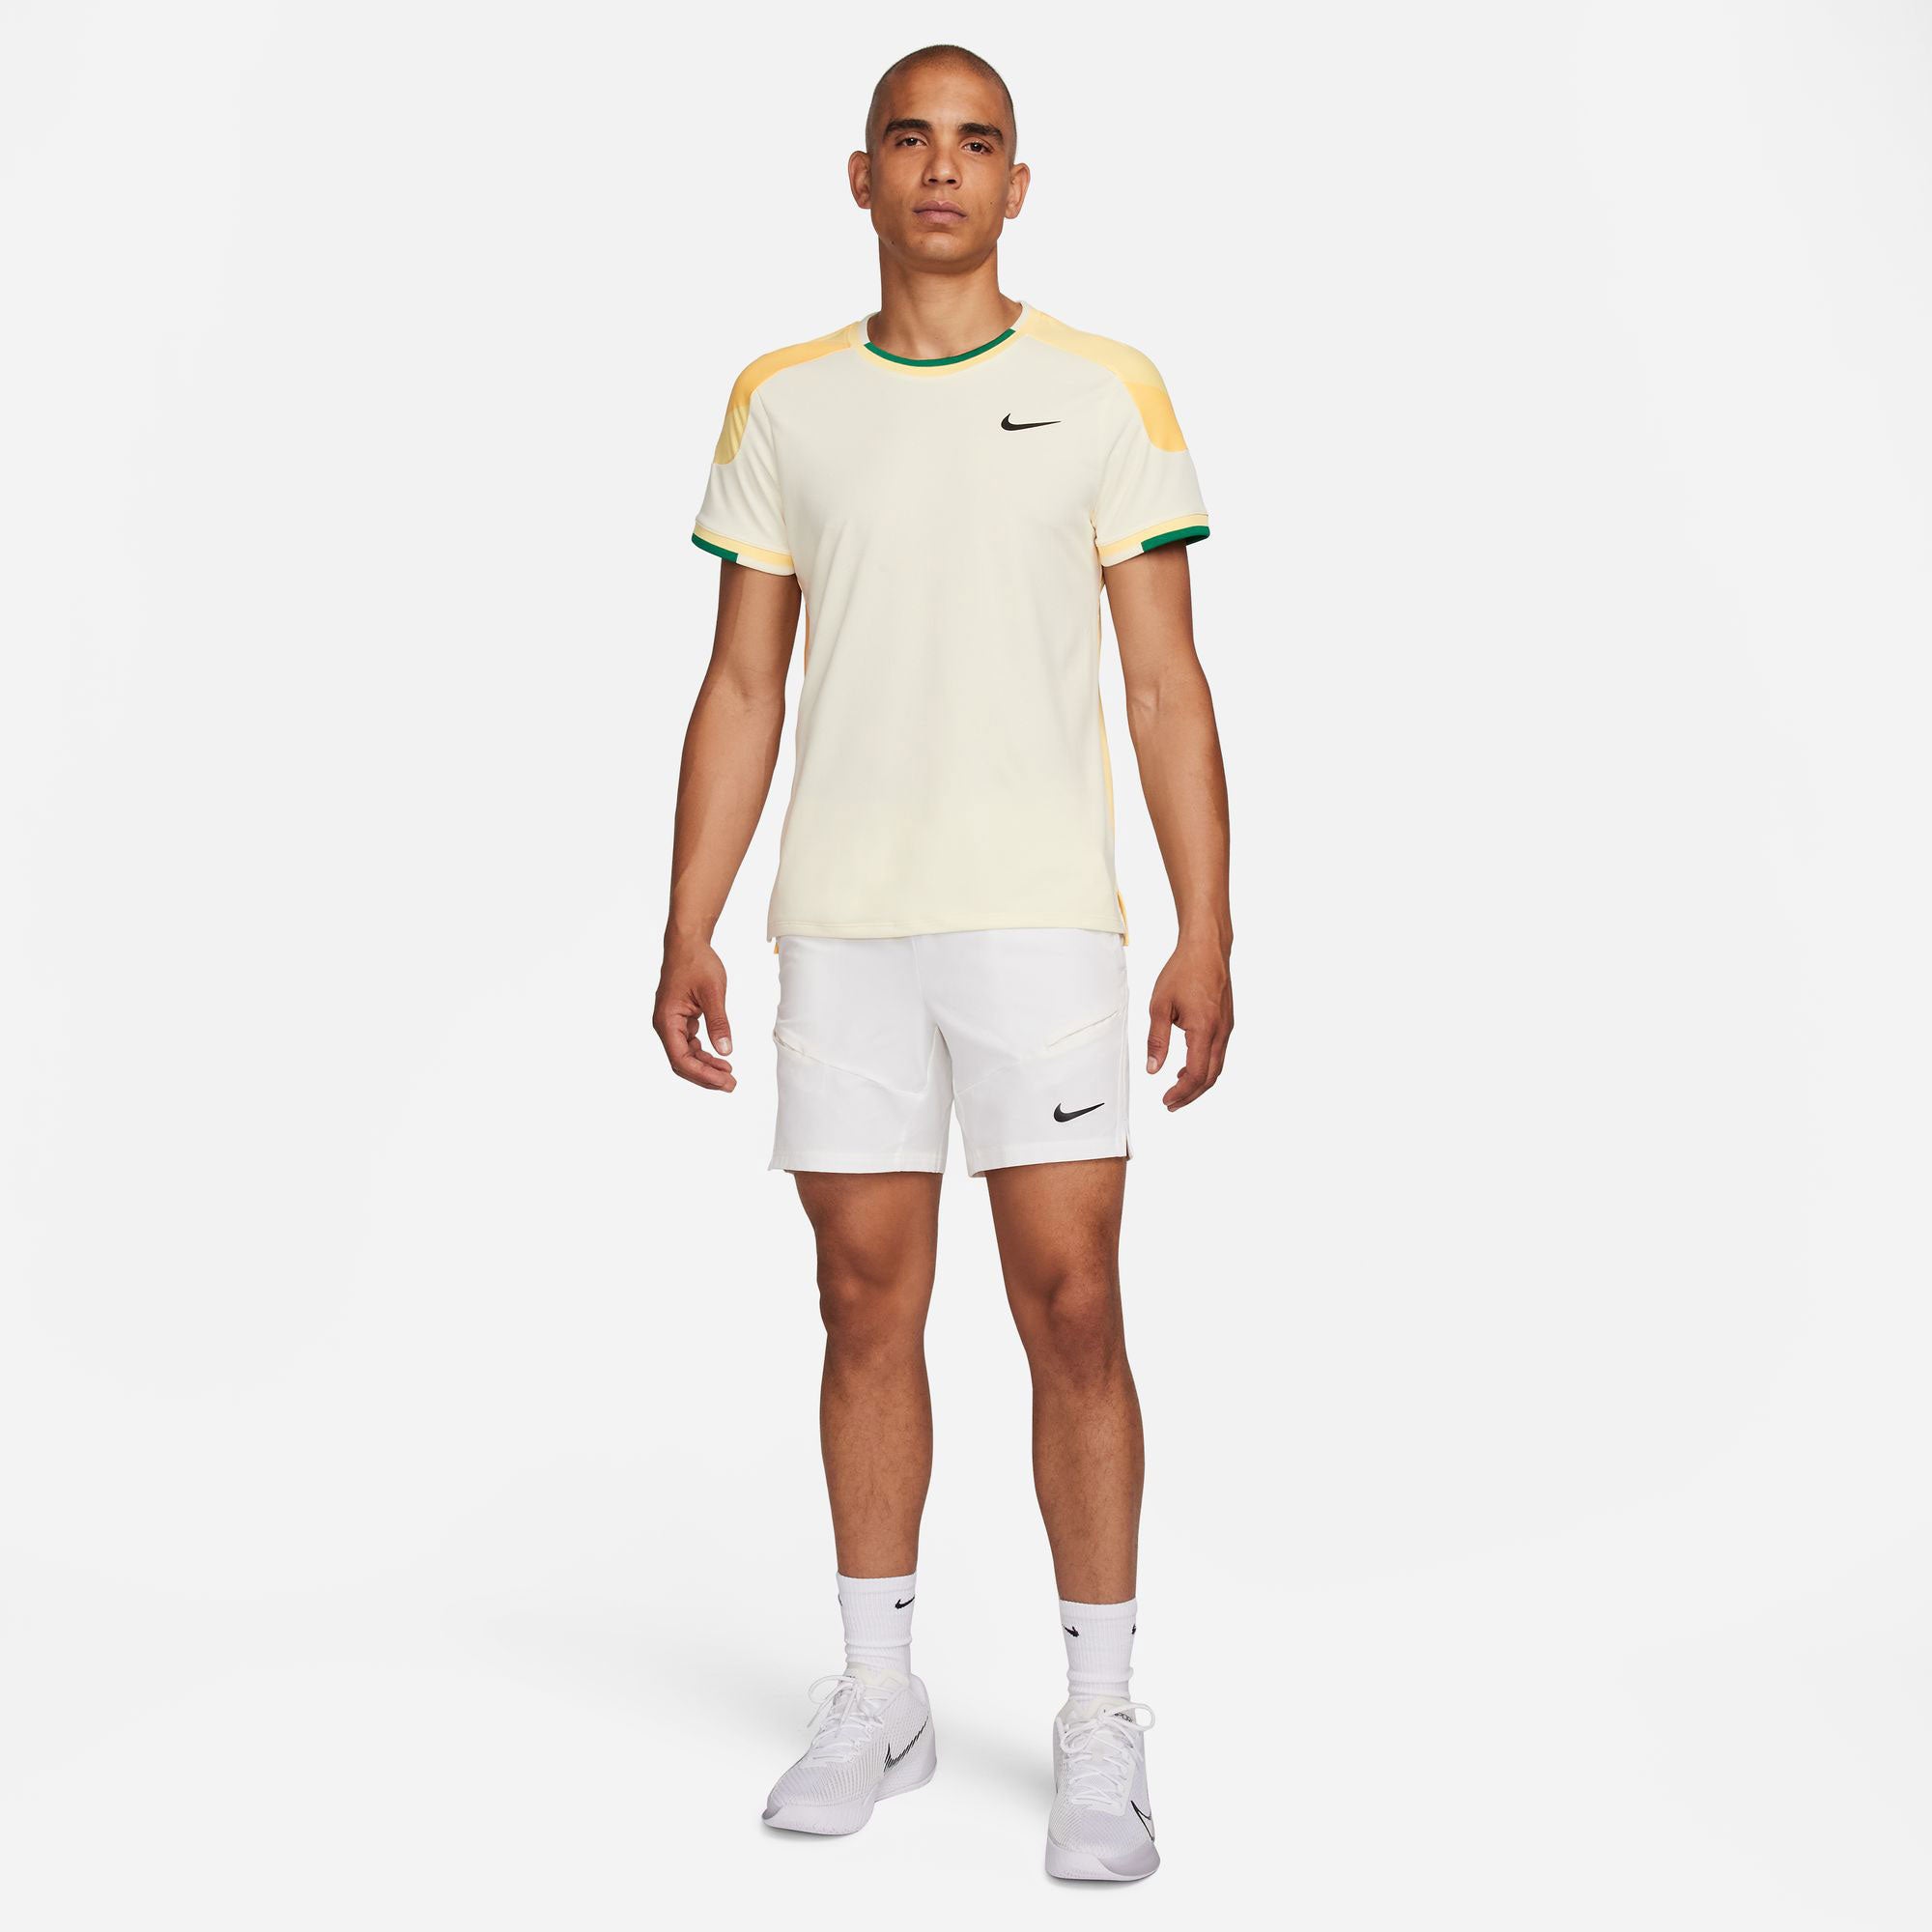 NikeCourt Slam Melbourne Men's Dri-FIT Tennis Shirt - White (6)